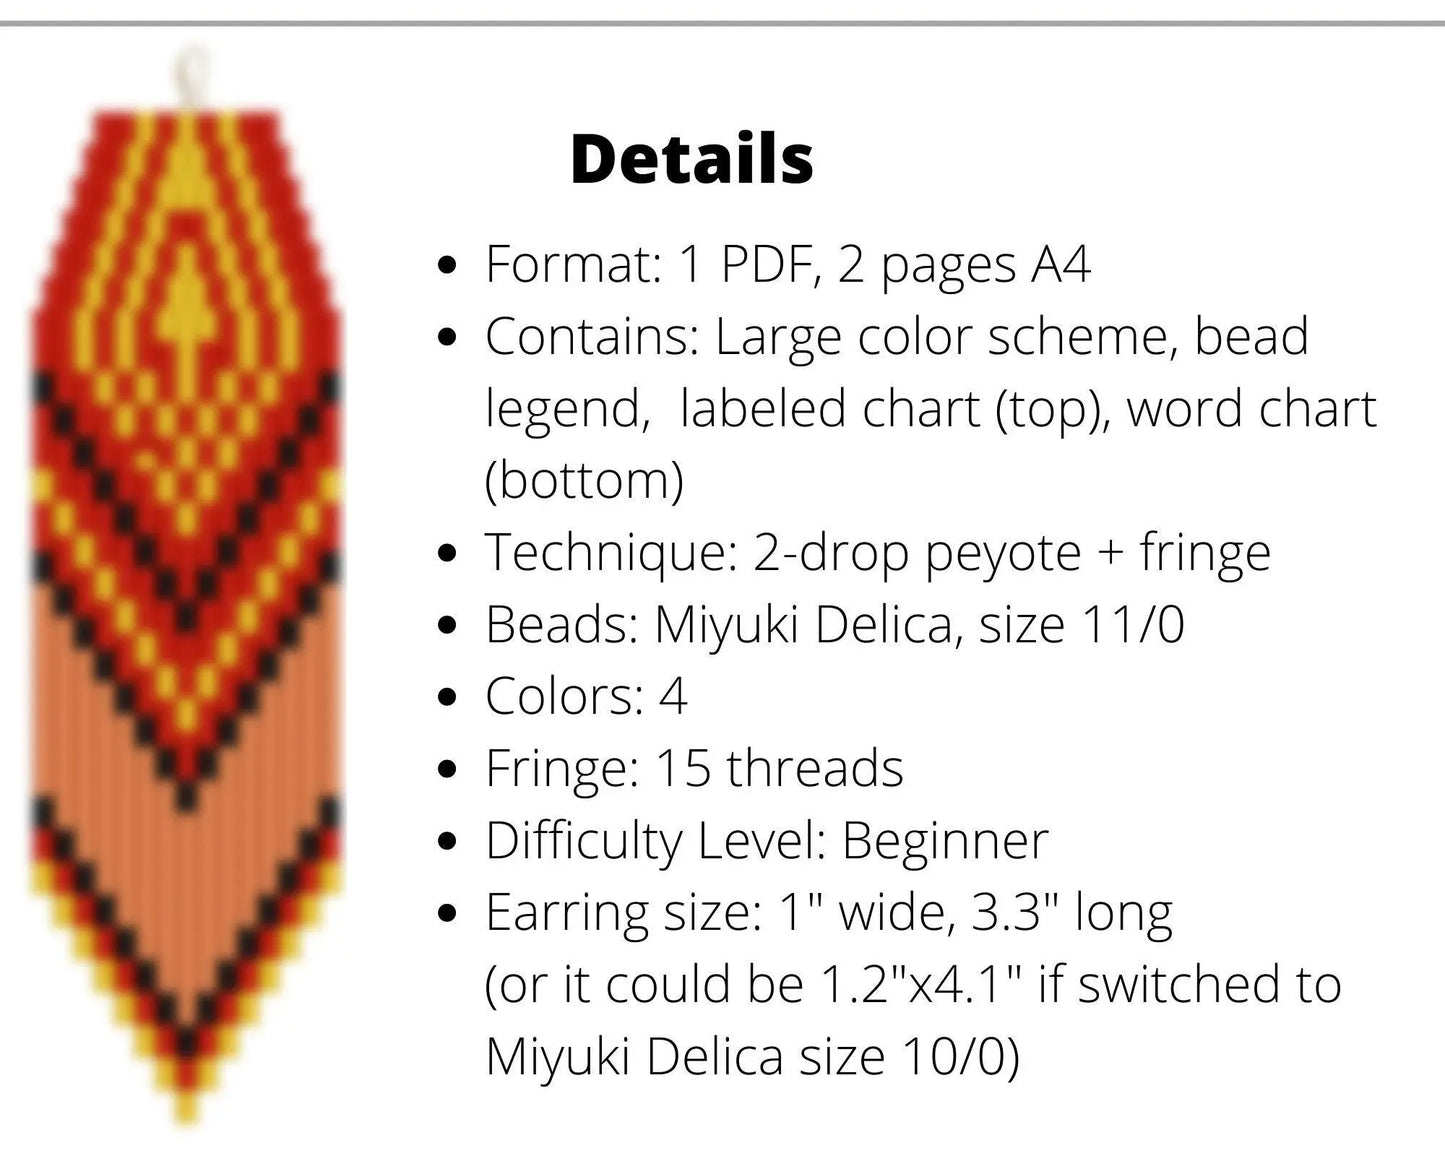 Red Ethnic Brick Stitch pattern for fringe beaded earrings - NikoBeadsUA